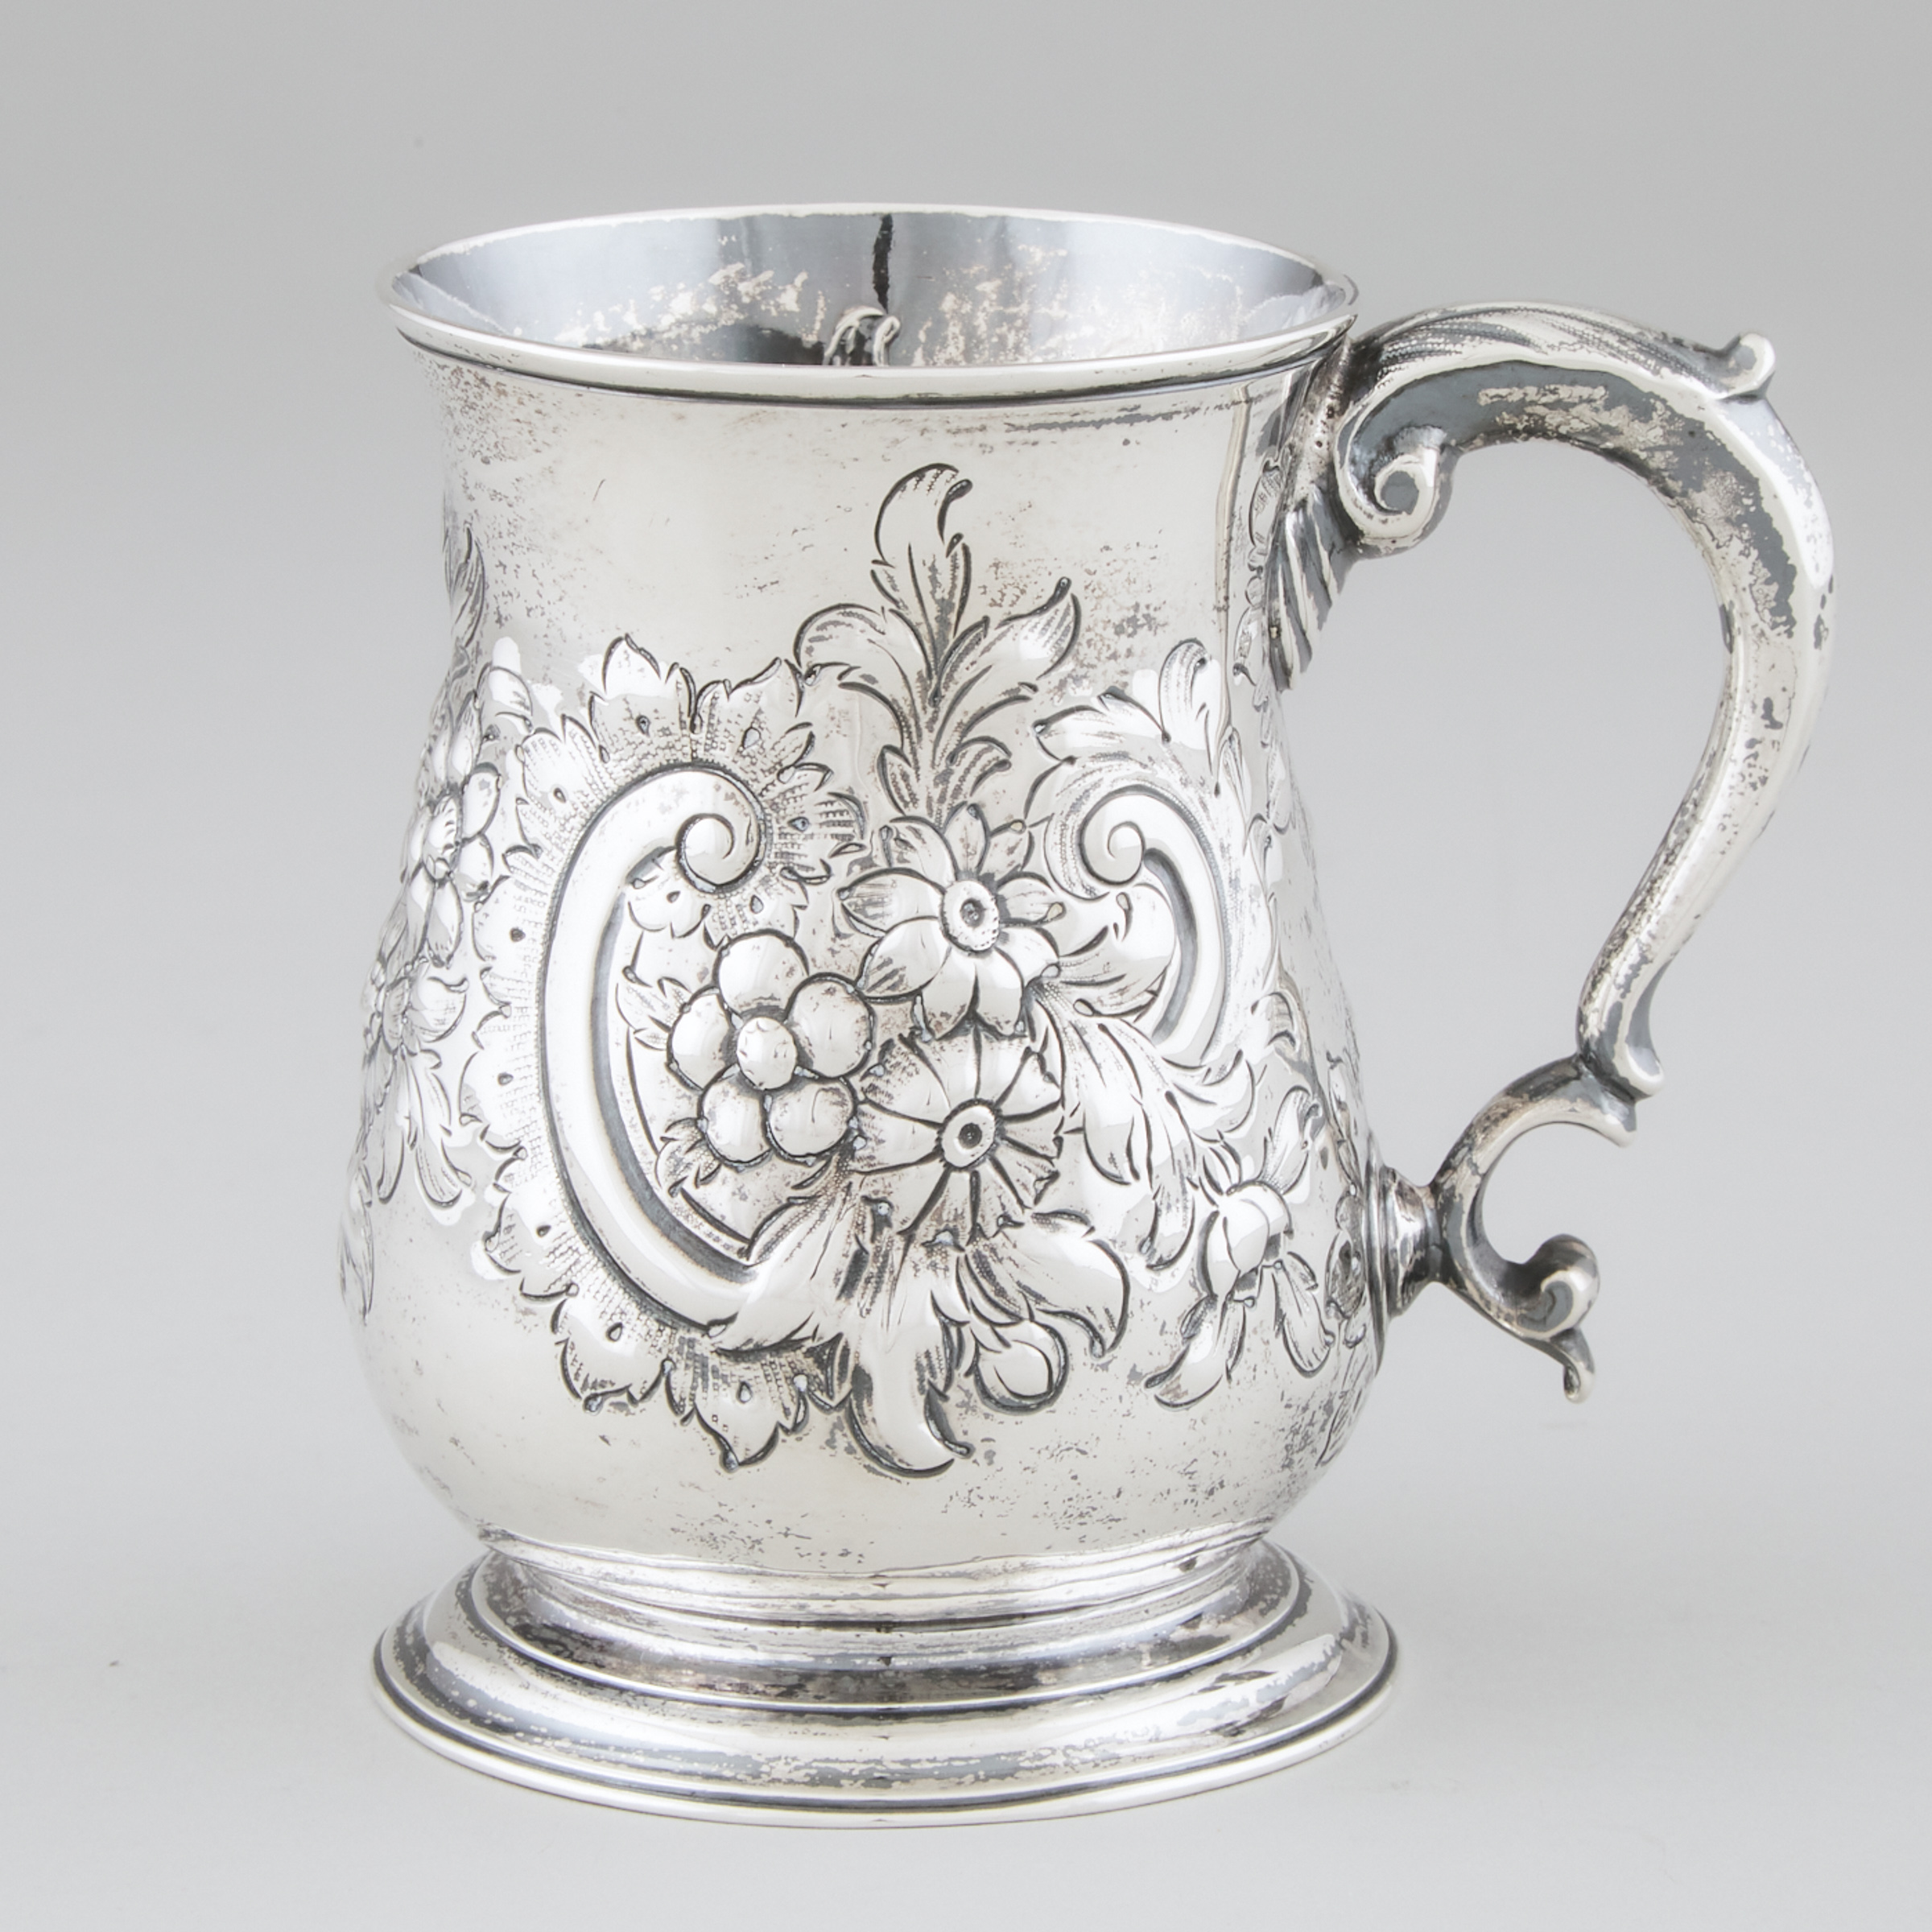 George II Silver Mug, probably